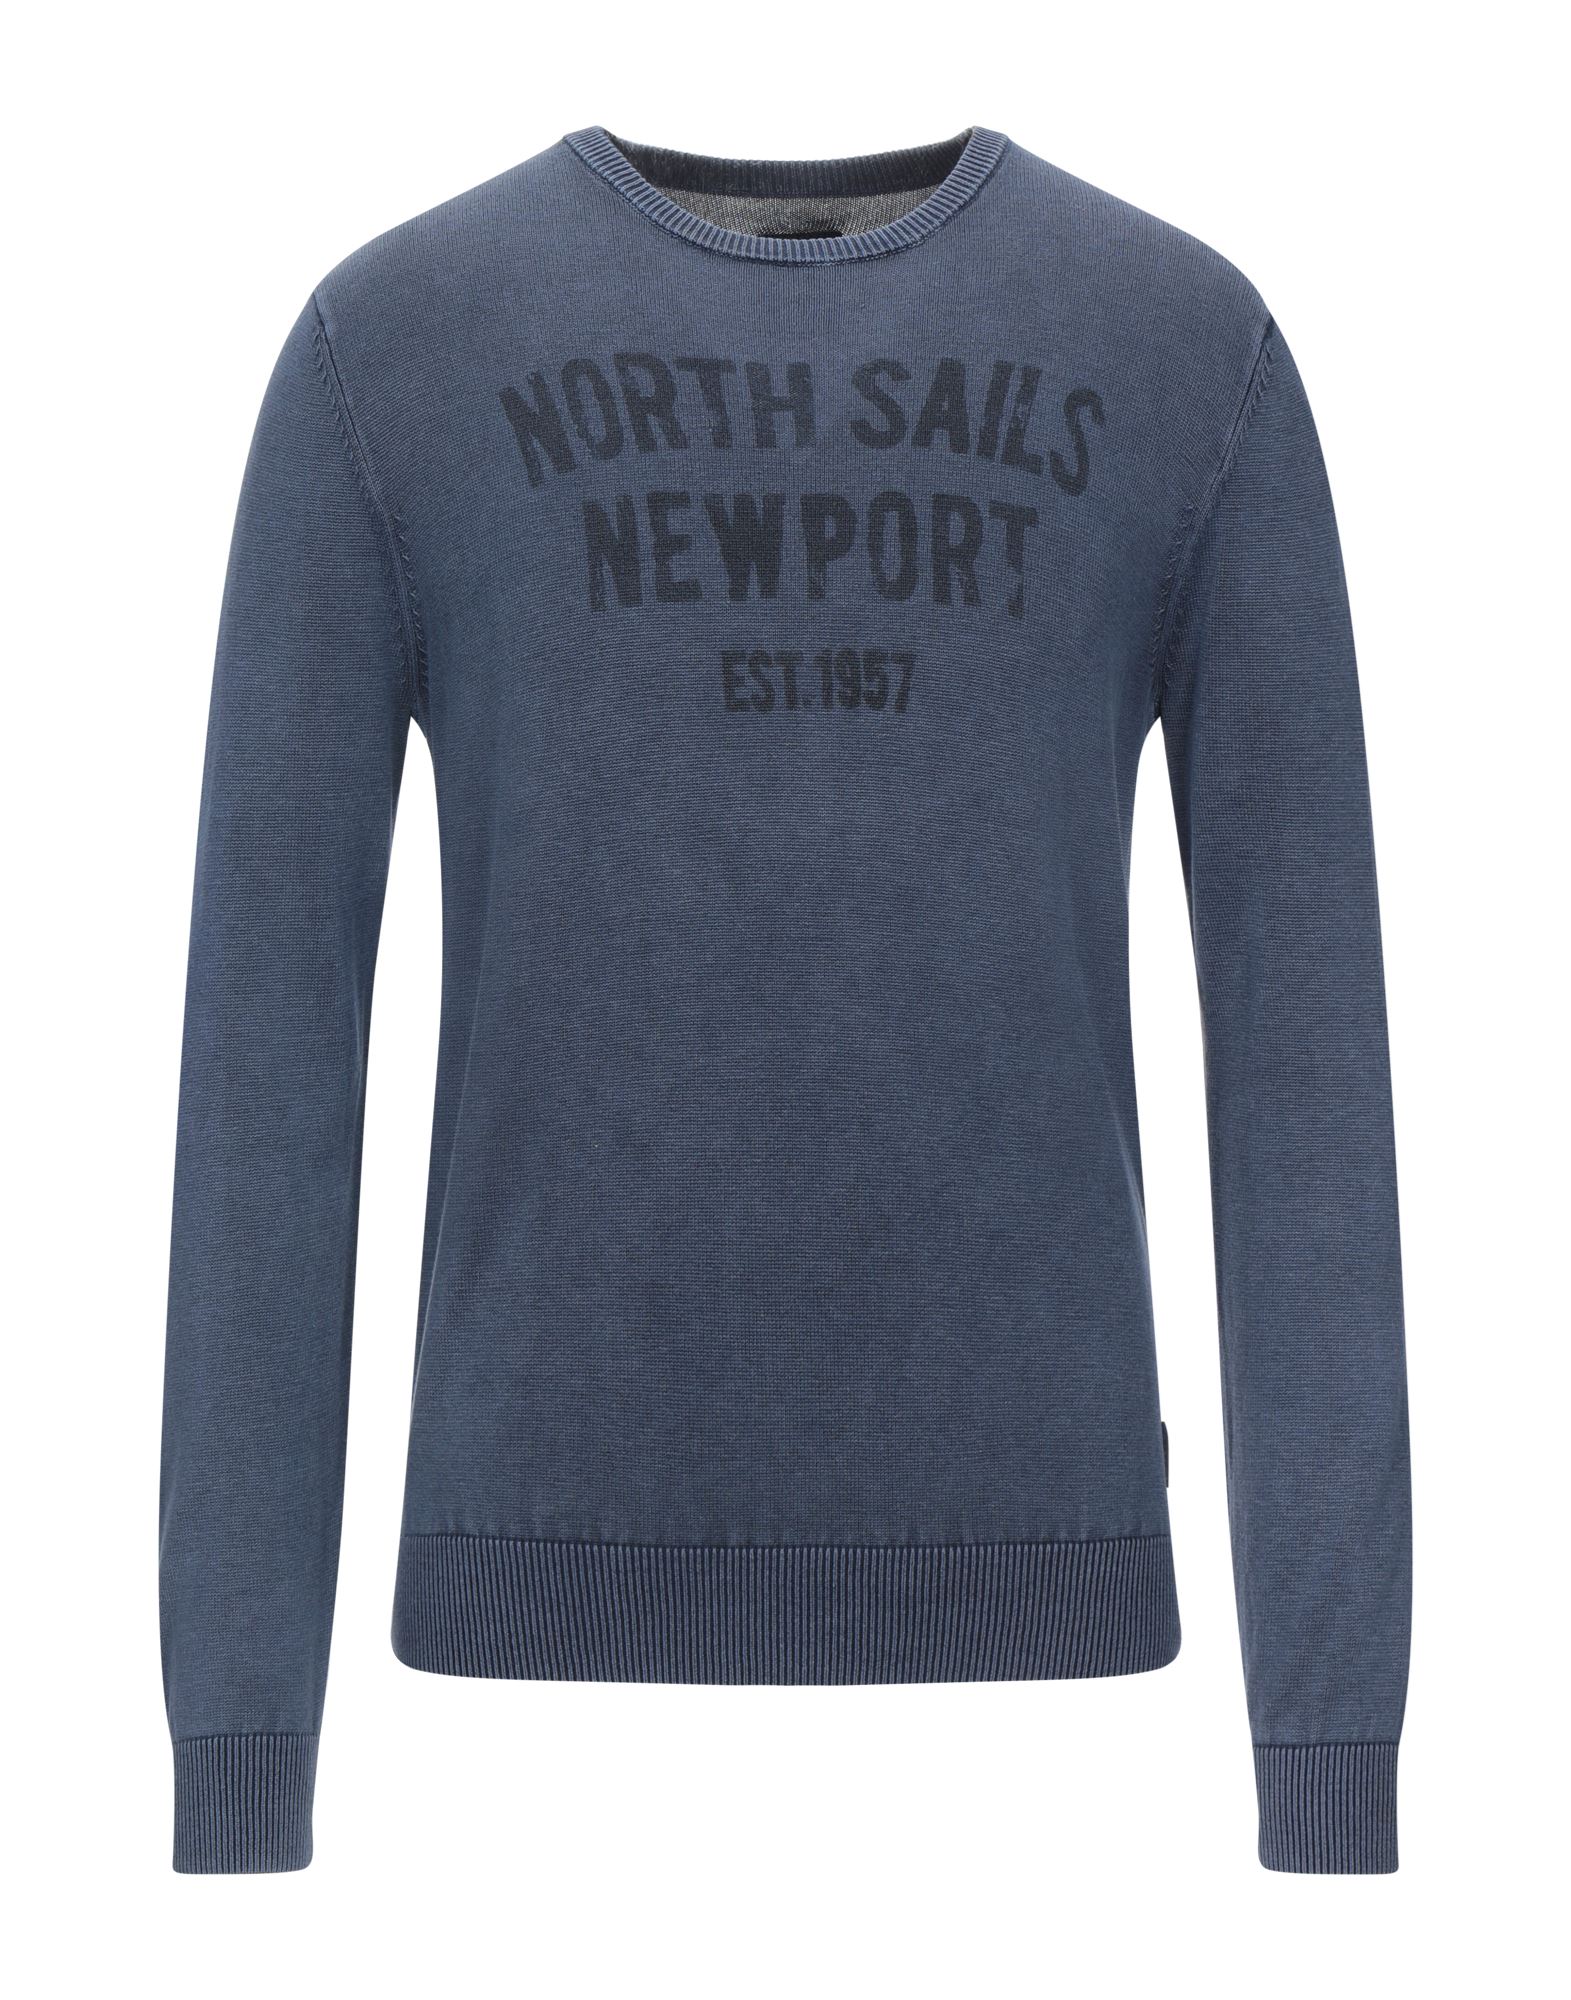 NORTH SAILS Sweaters - Item 14102478